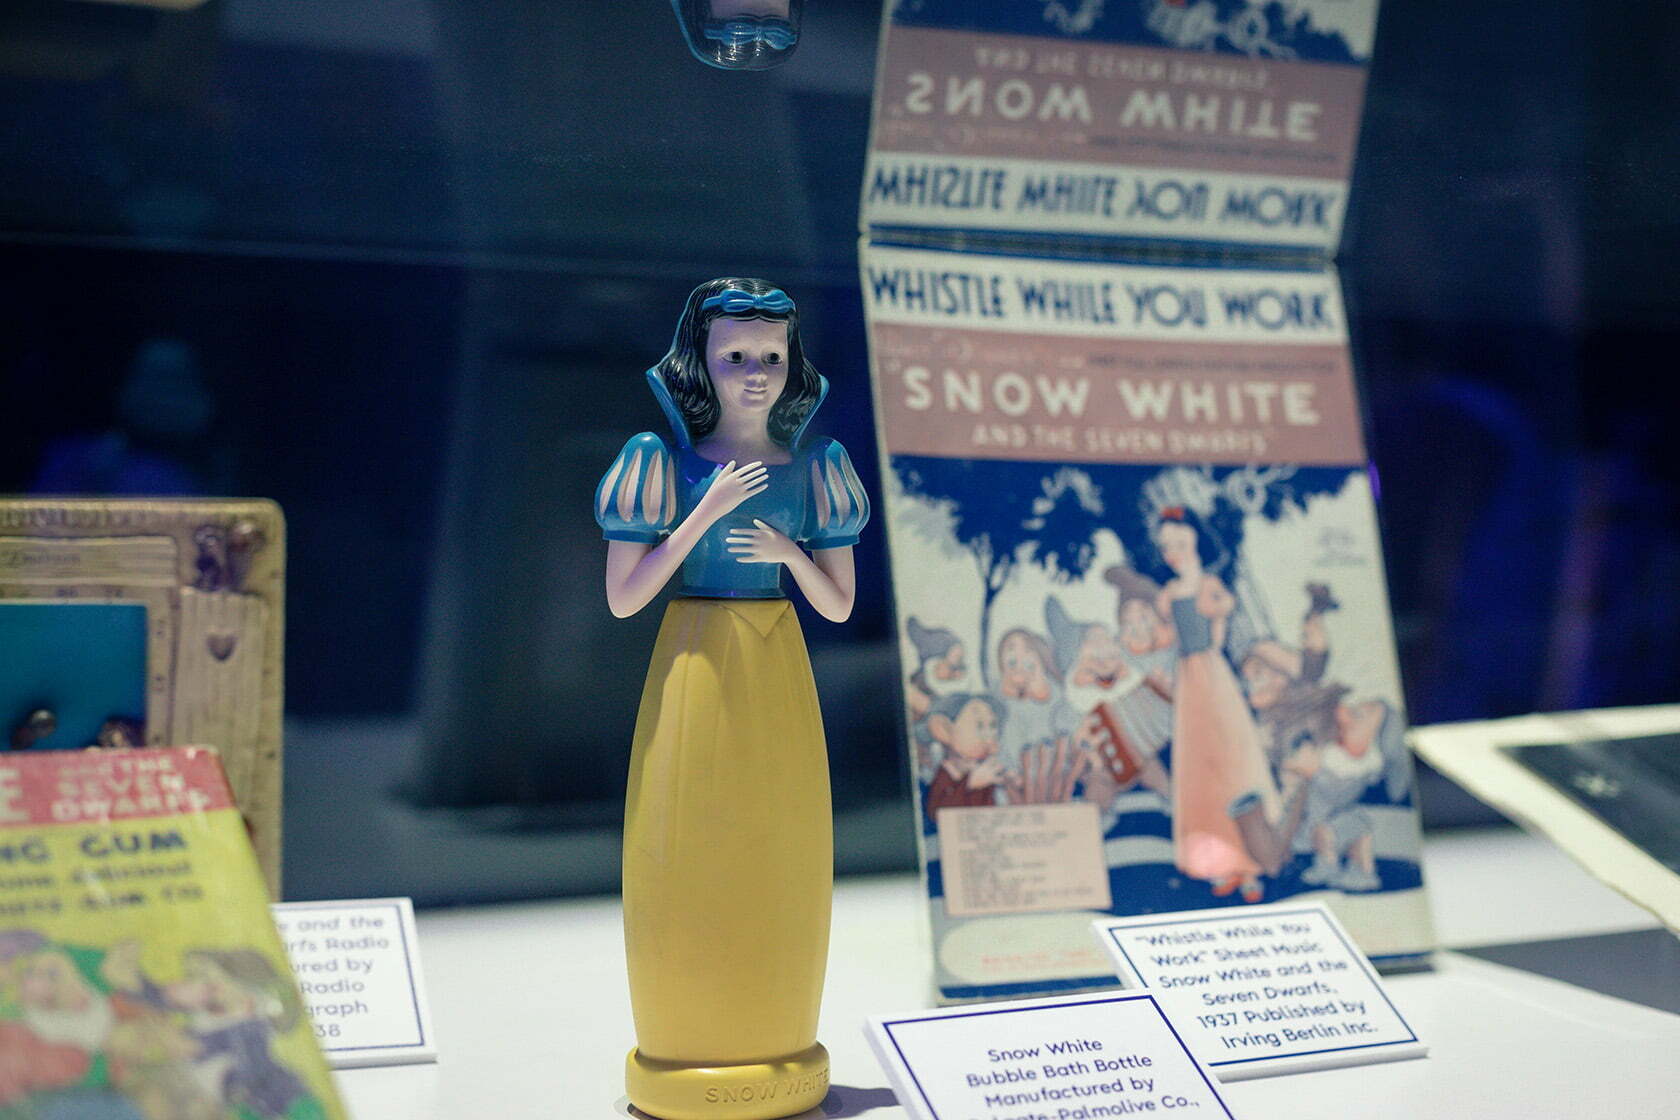 Snow White bubble bath bottle - Disney100: Disney 100 Years of Wonder exhibit at D23 Expo (Photo: Julie Nguyen/SNAP TASTE)